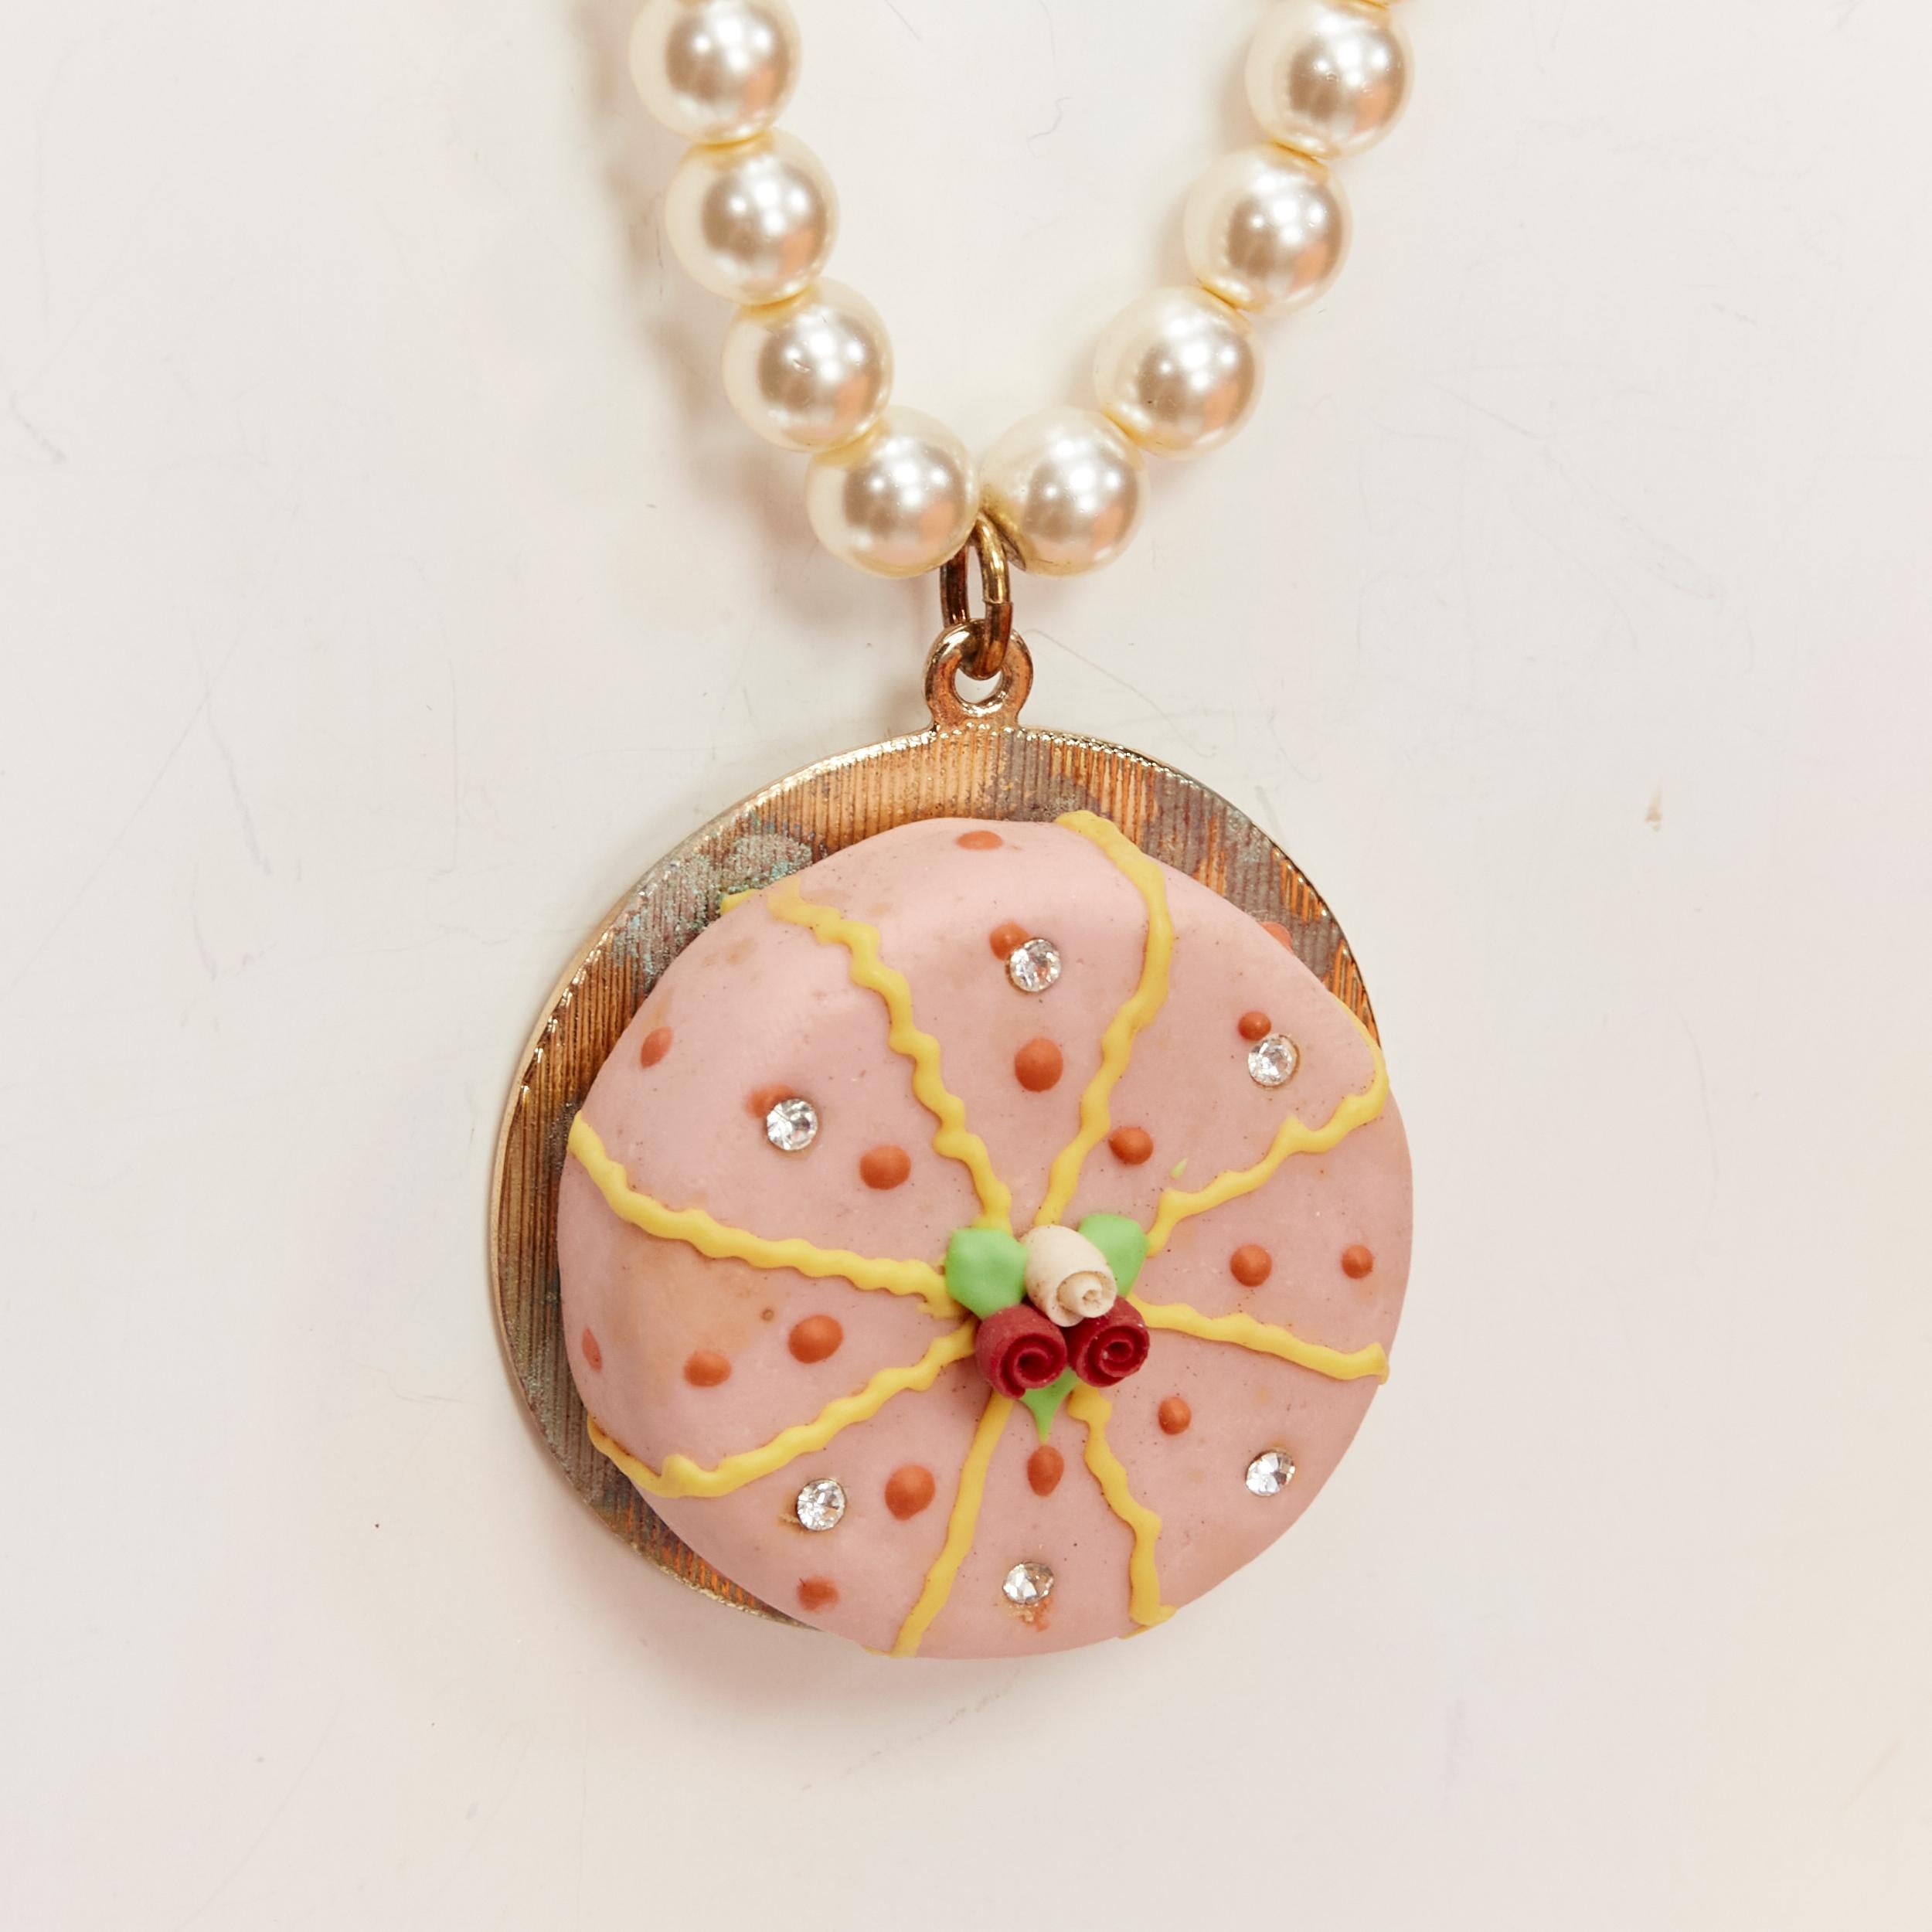 LE BIJOUX DE SOPHIE Hello Kitty pearl cake bow necklace For Sale 1